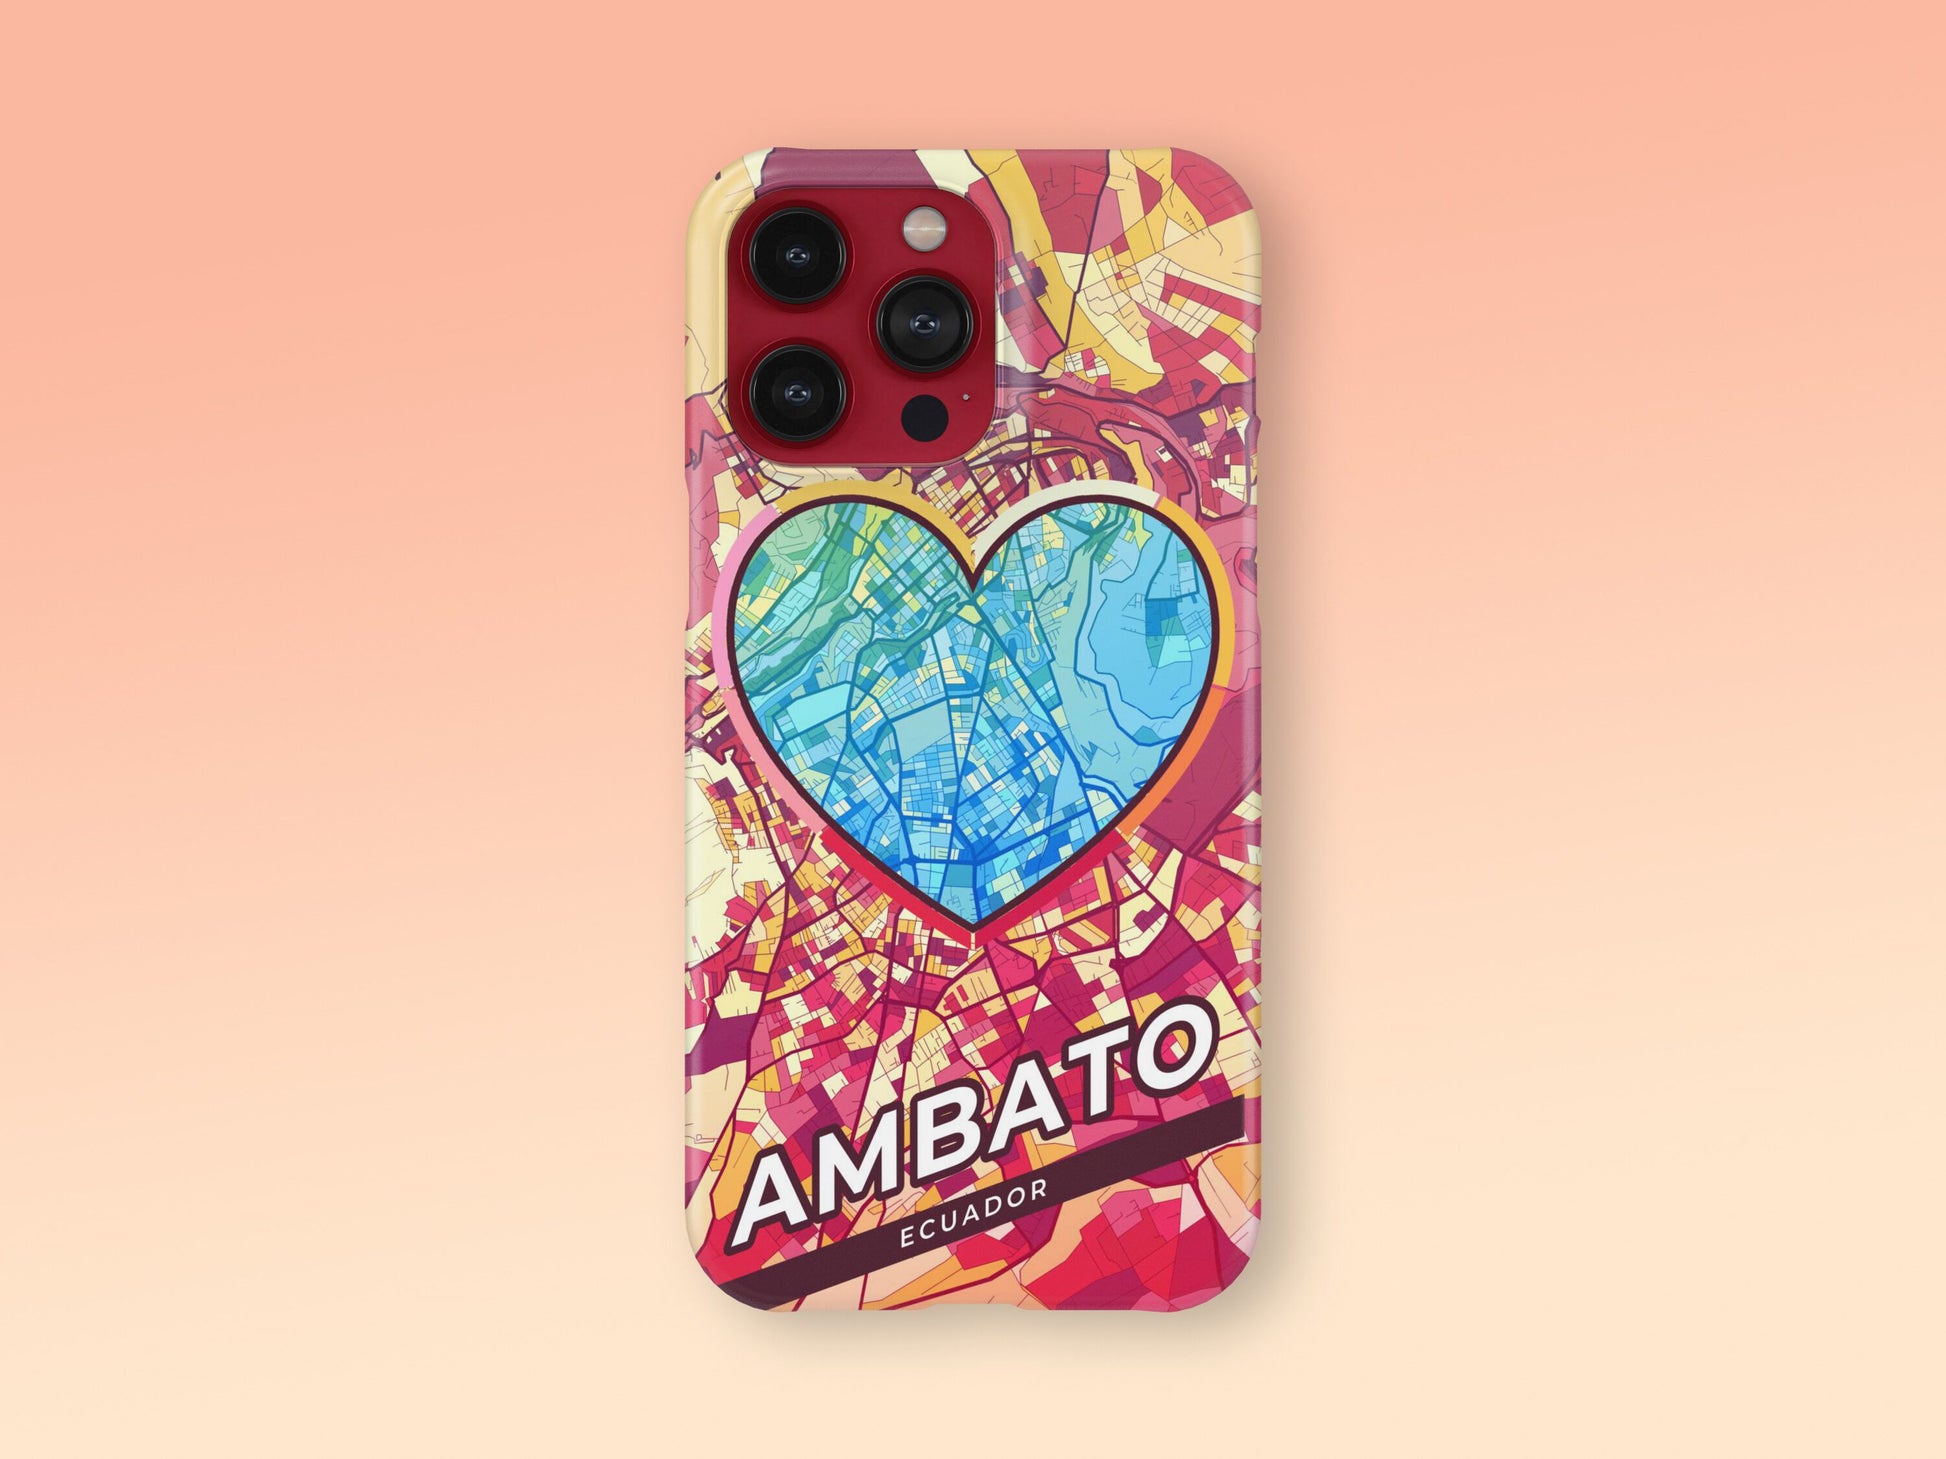 Ambato Ecuador slim phone case with colorful icon. Birthday, wedding or housewarming gift. Couple match cases. 2